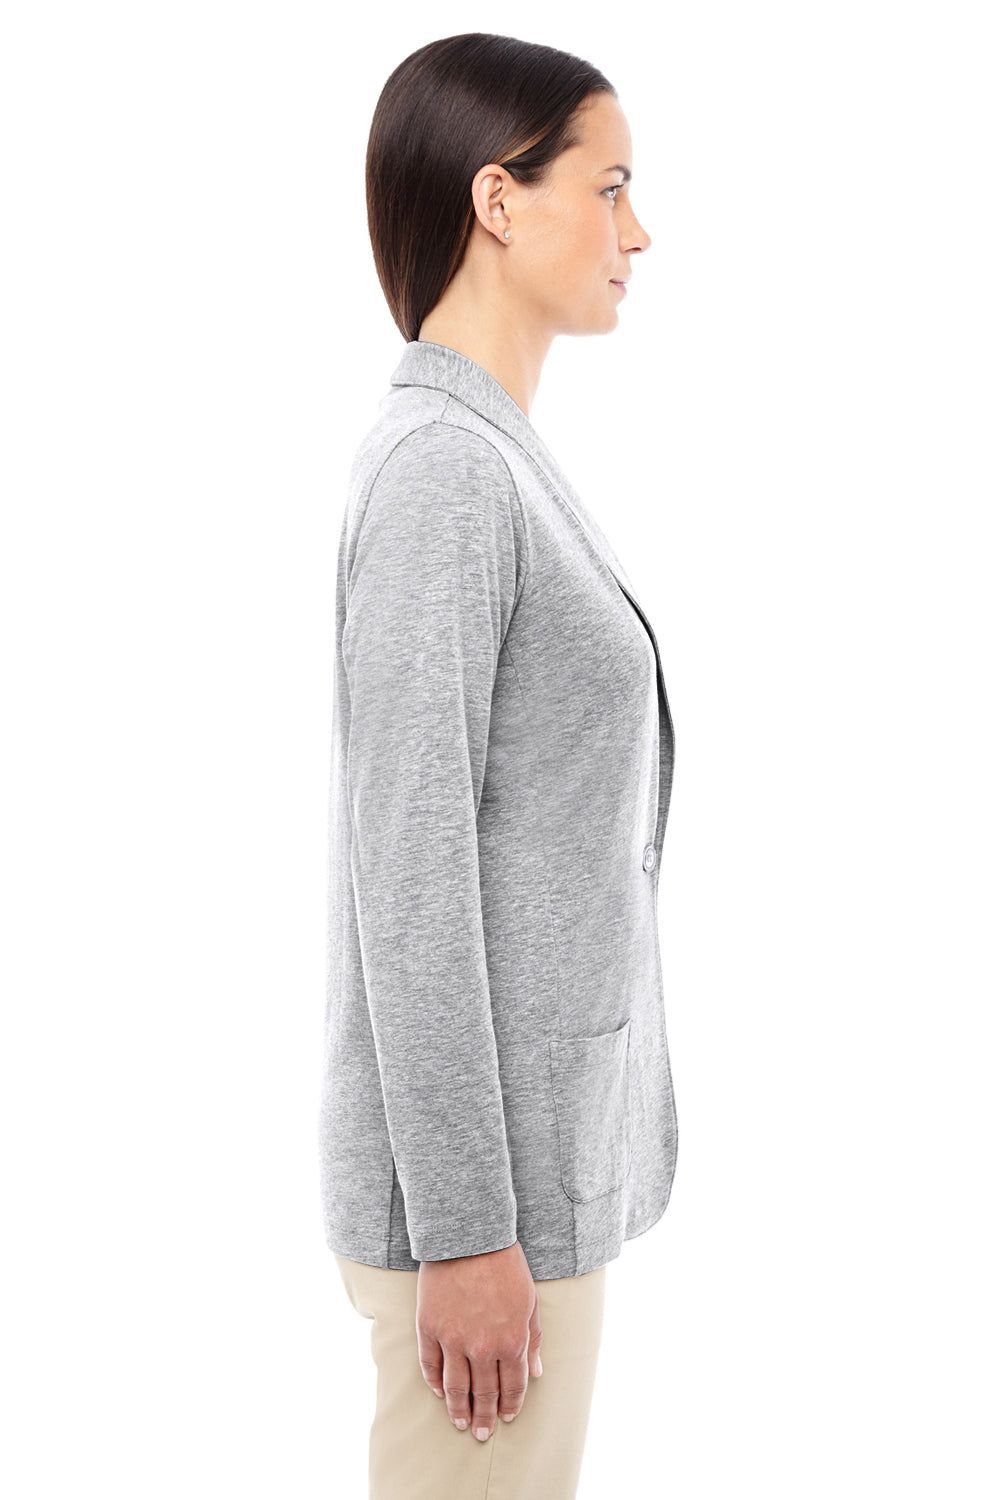 Devon & Jones DP462W Womens Perfect Fit Cardigan Sweater Heather Grey Side